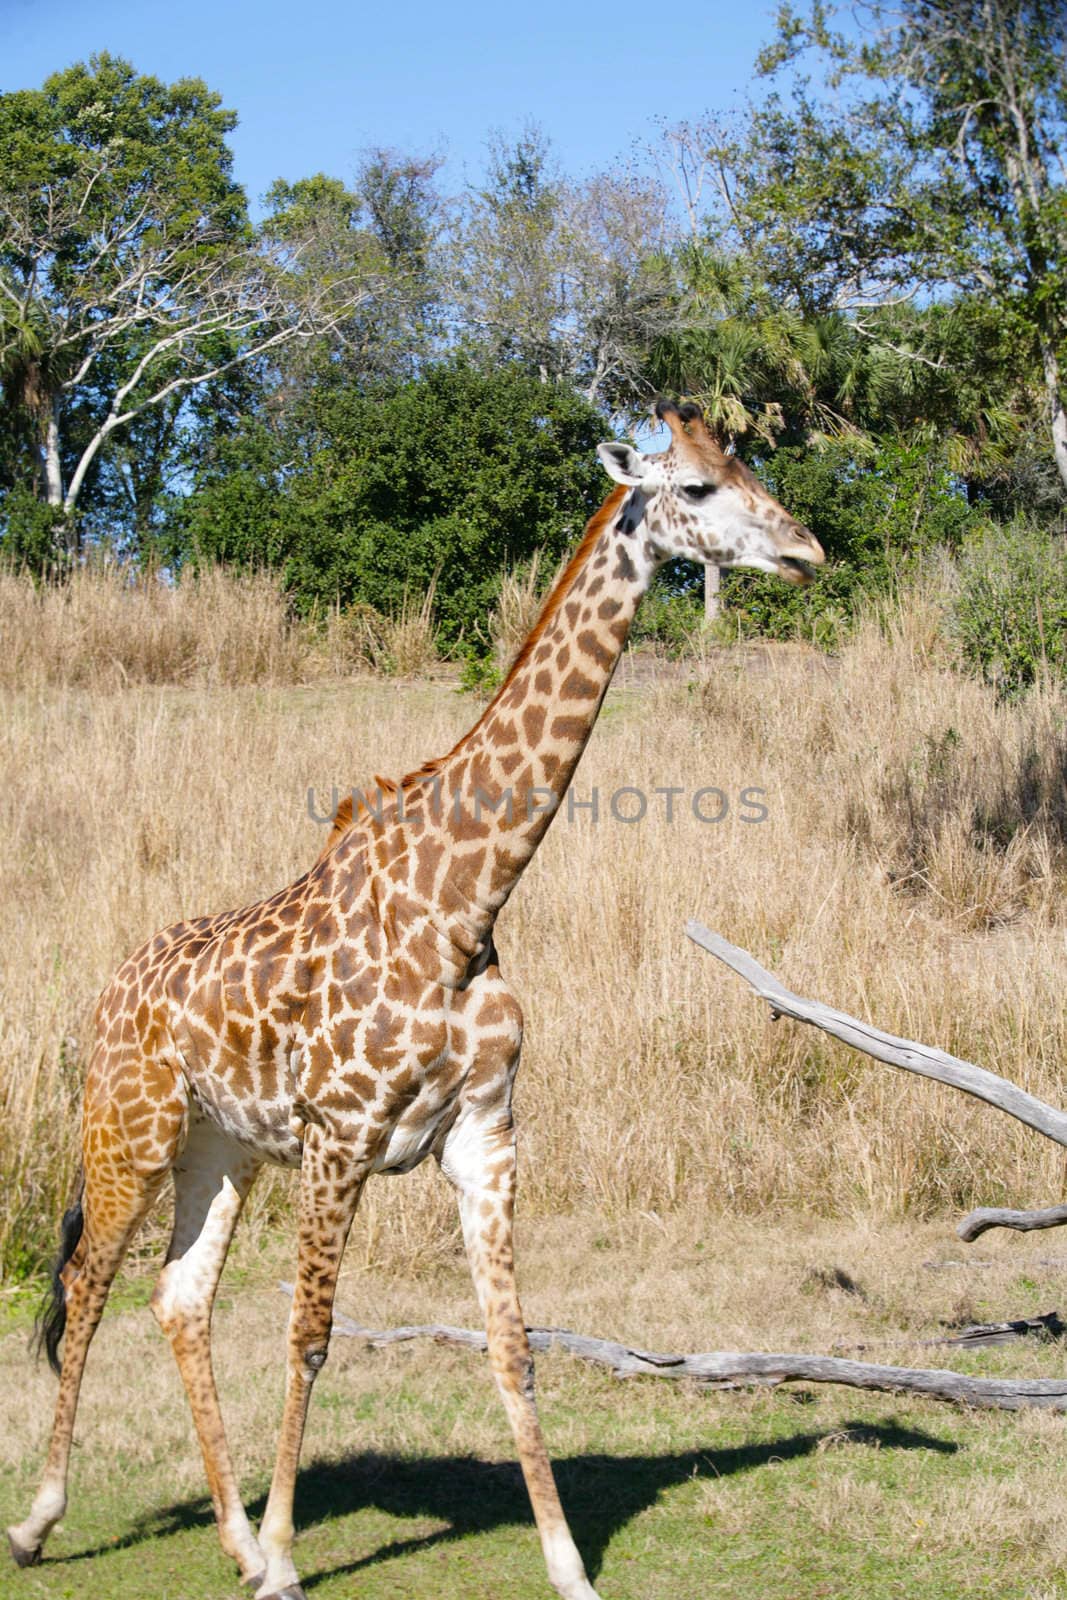 Giraffe in Africa. Focus in the body. by dacasdo